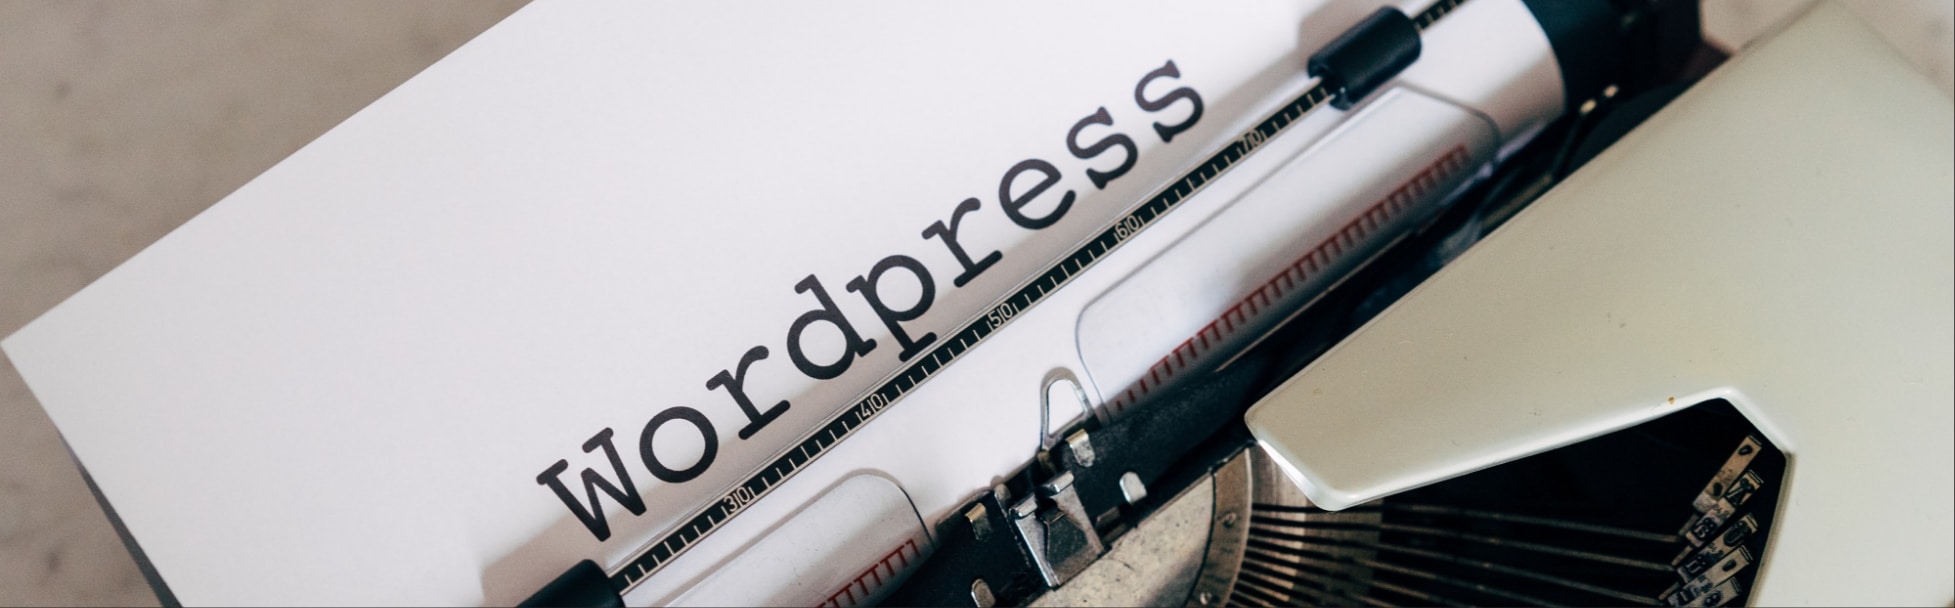 Headless WordPress: the Decoupling of Concerns